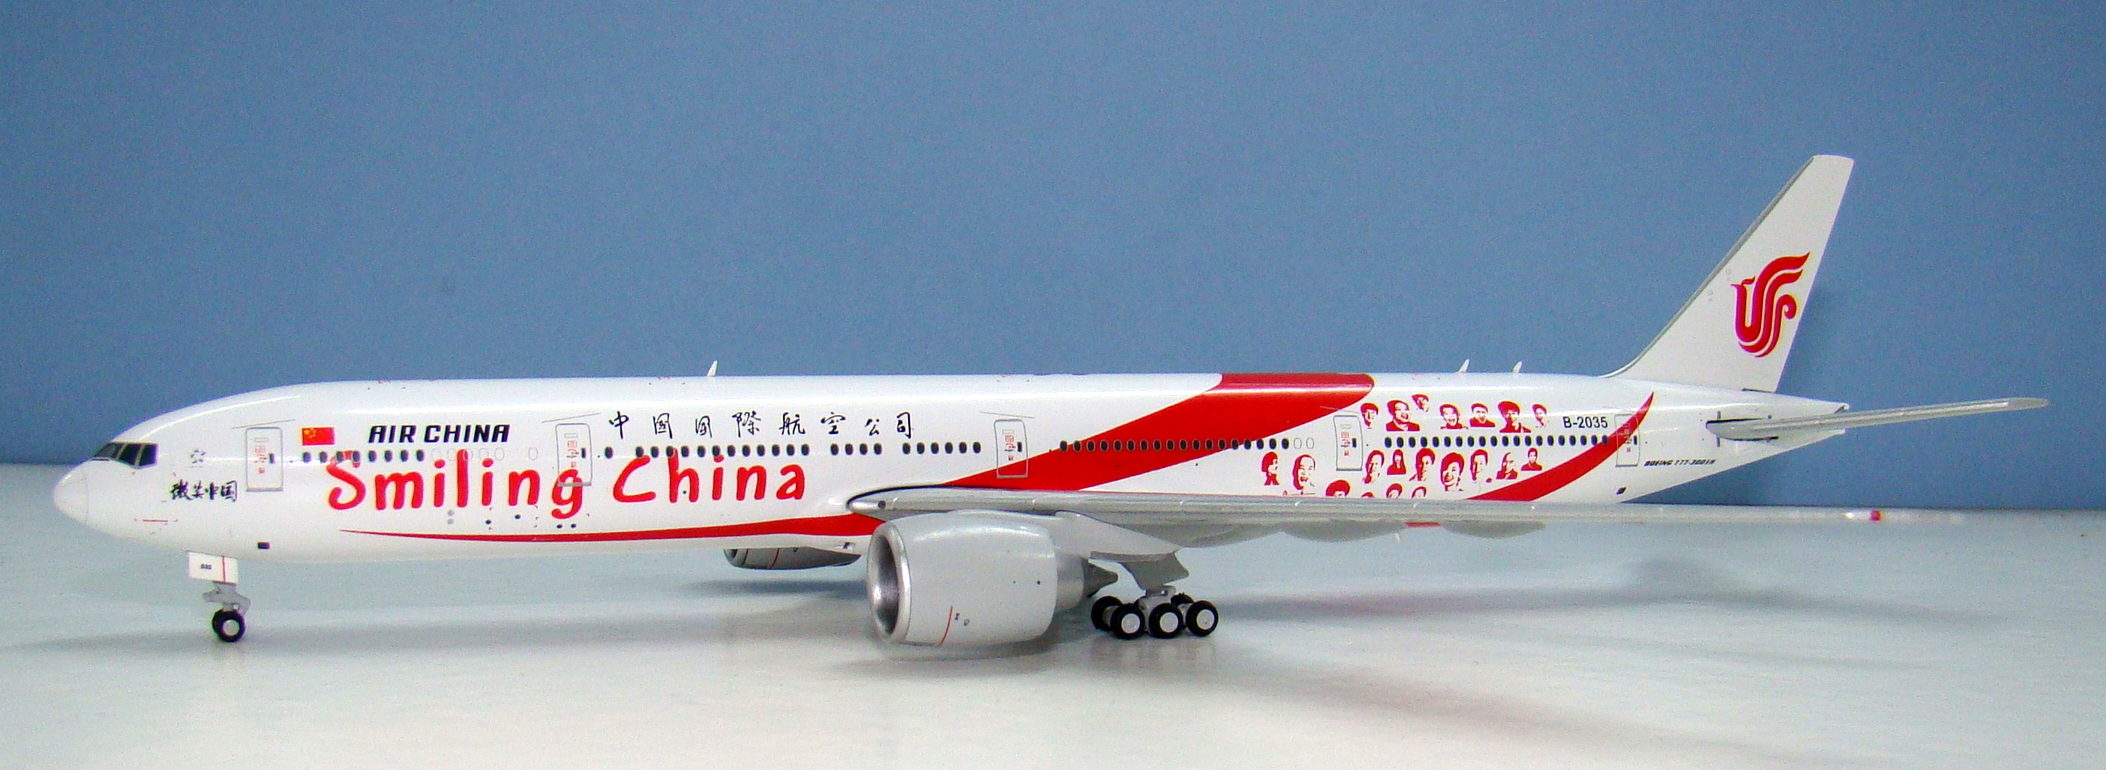 Smiling China: Air China Boeing 777-39LER B-2035 by JC Wings